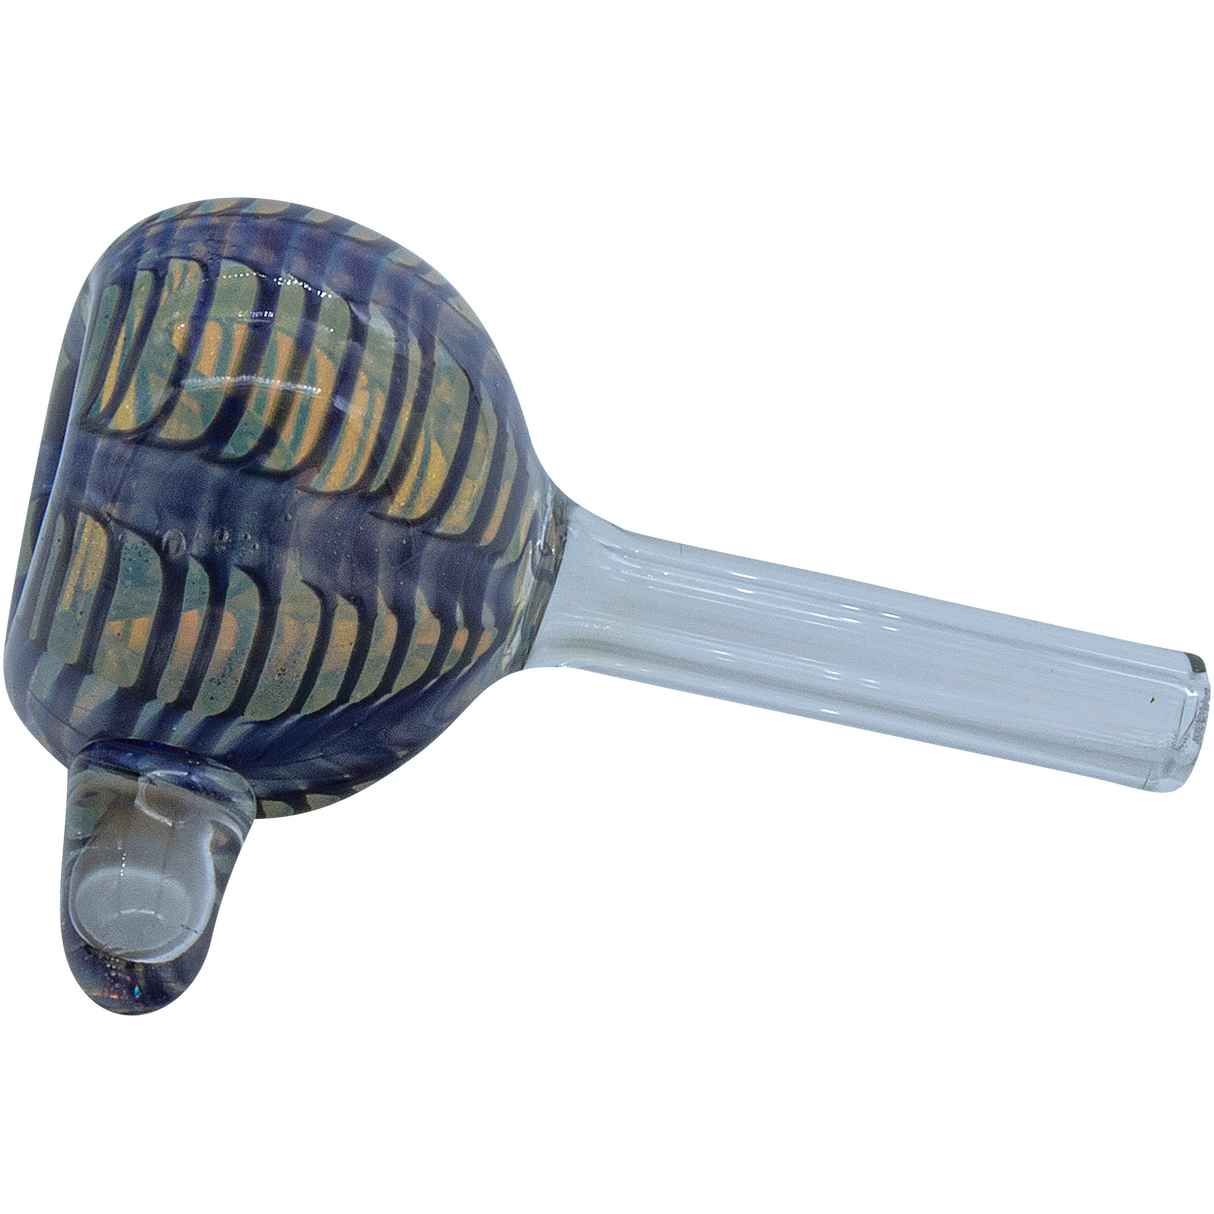 LA Pipes Color Raked Bubble Pull-Stem Slide Bowl for Bongs, Grommet Joint, Borosilicate Glass